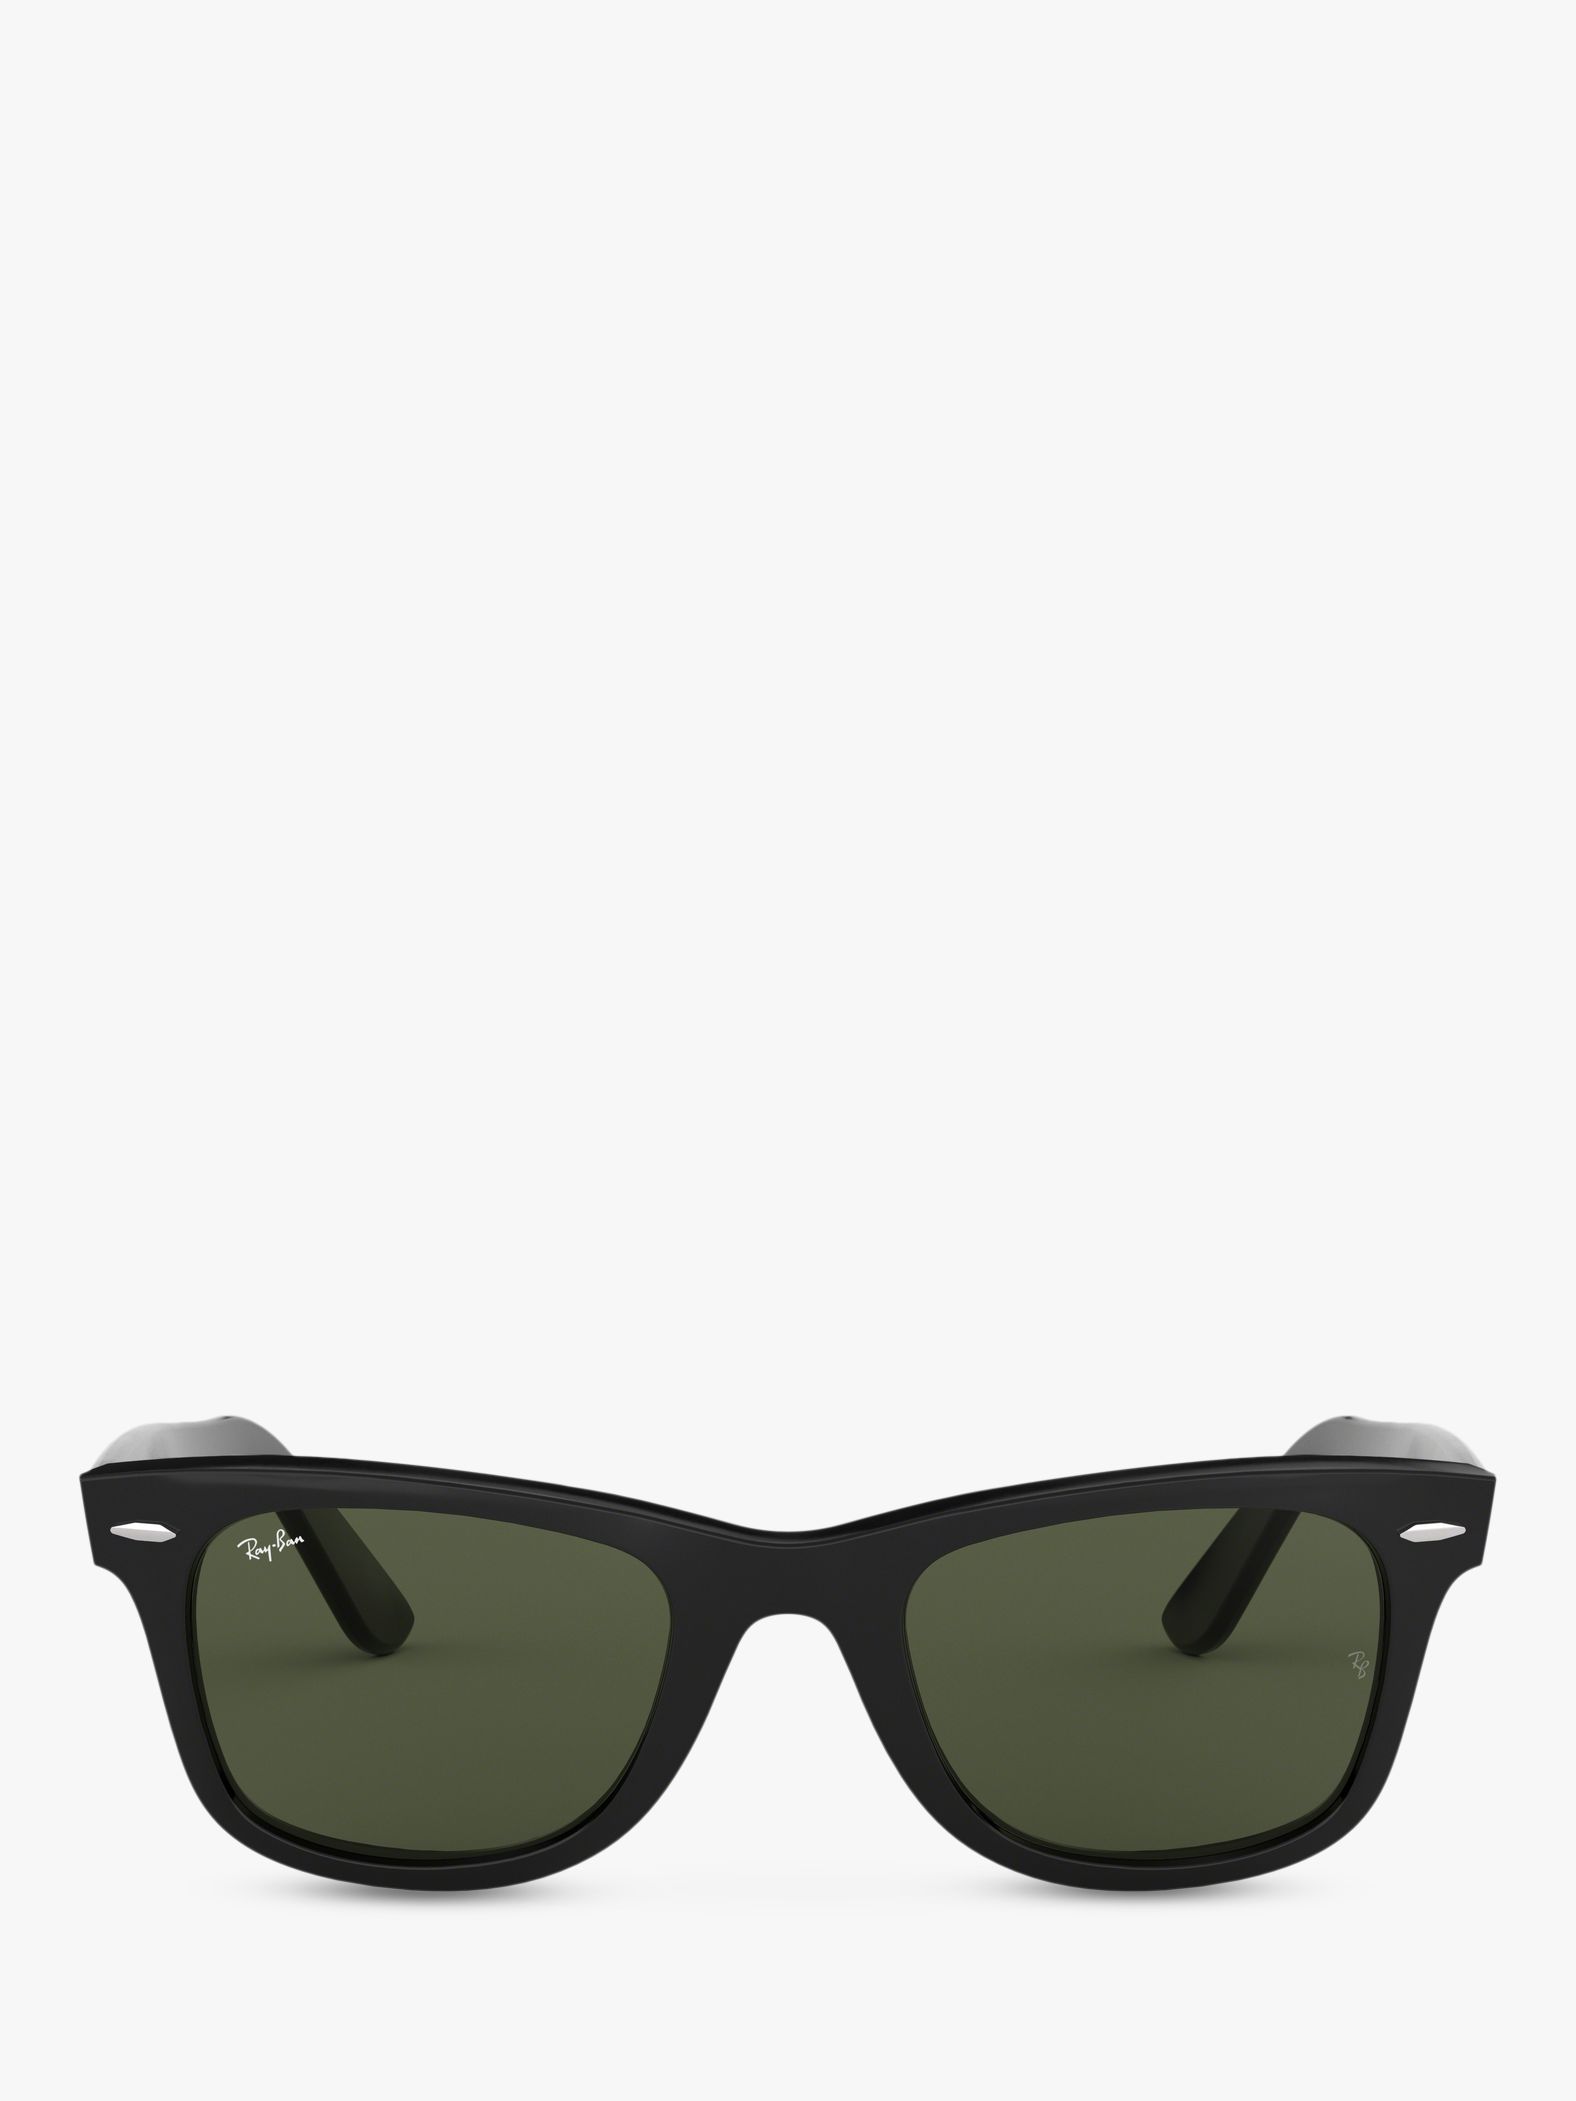 Ray-Ban RB2140 Unisex New Wayfarer Sunglasses, Black/Green